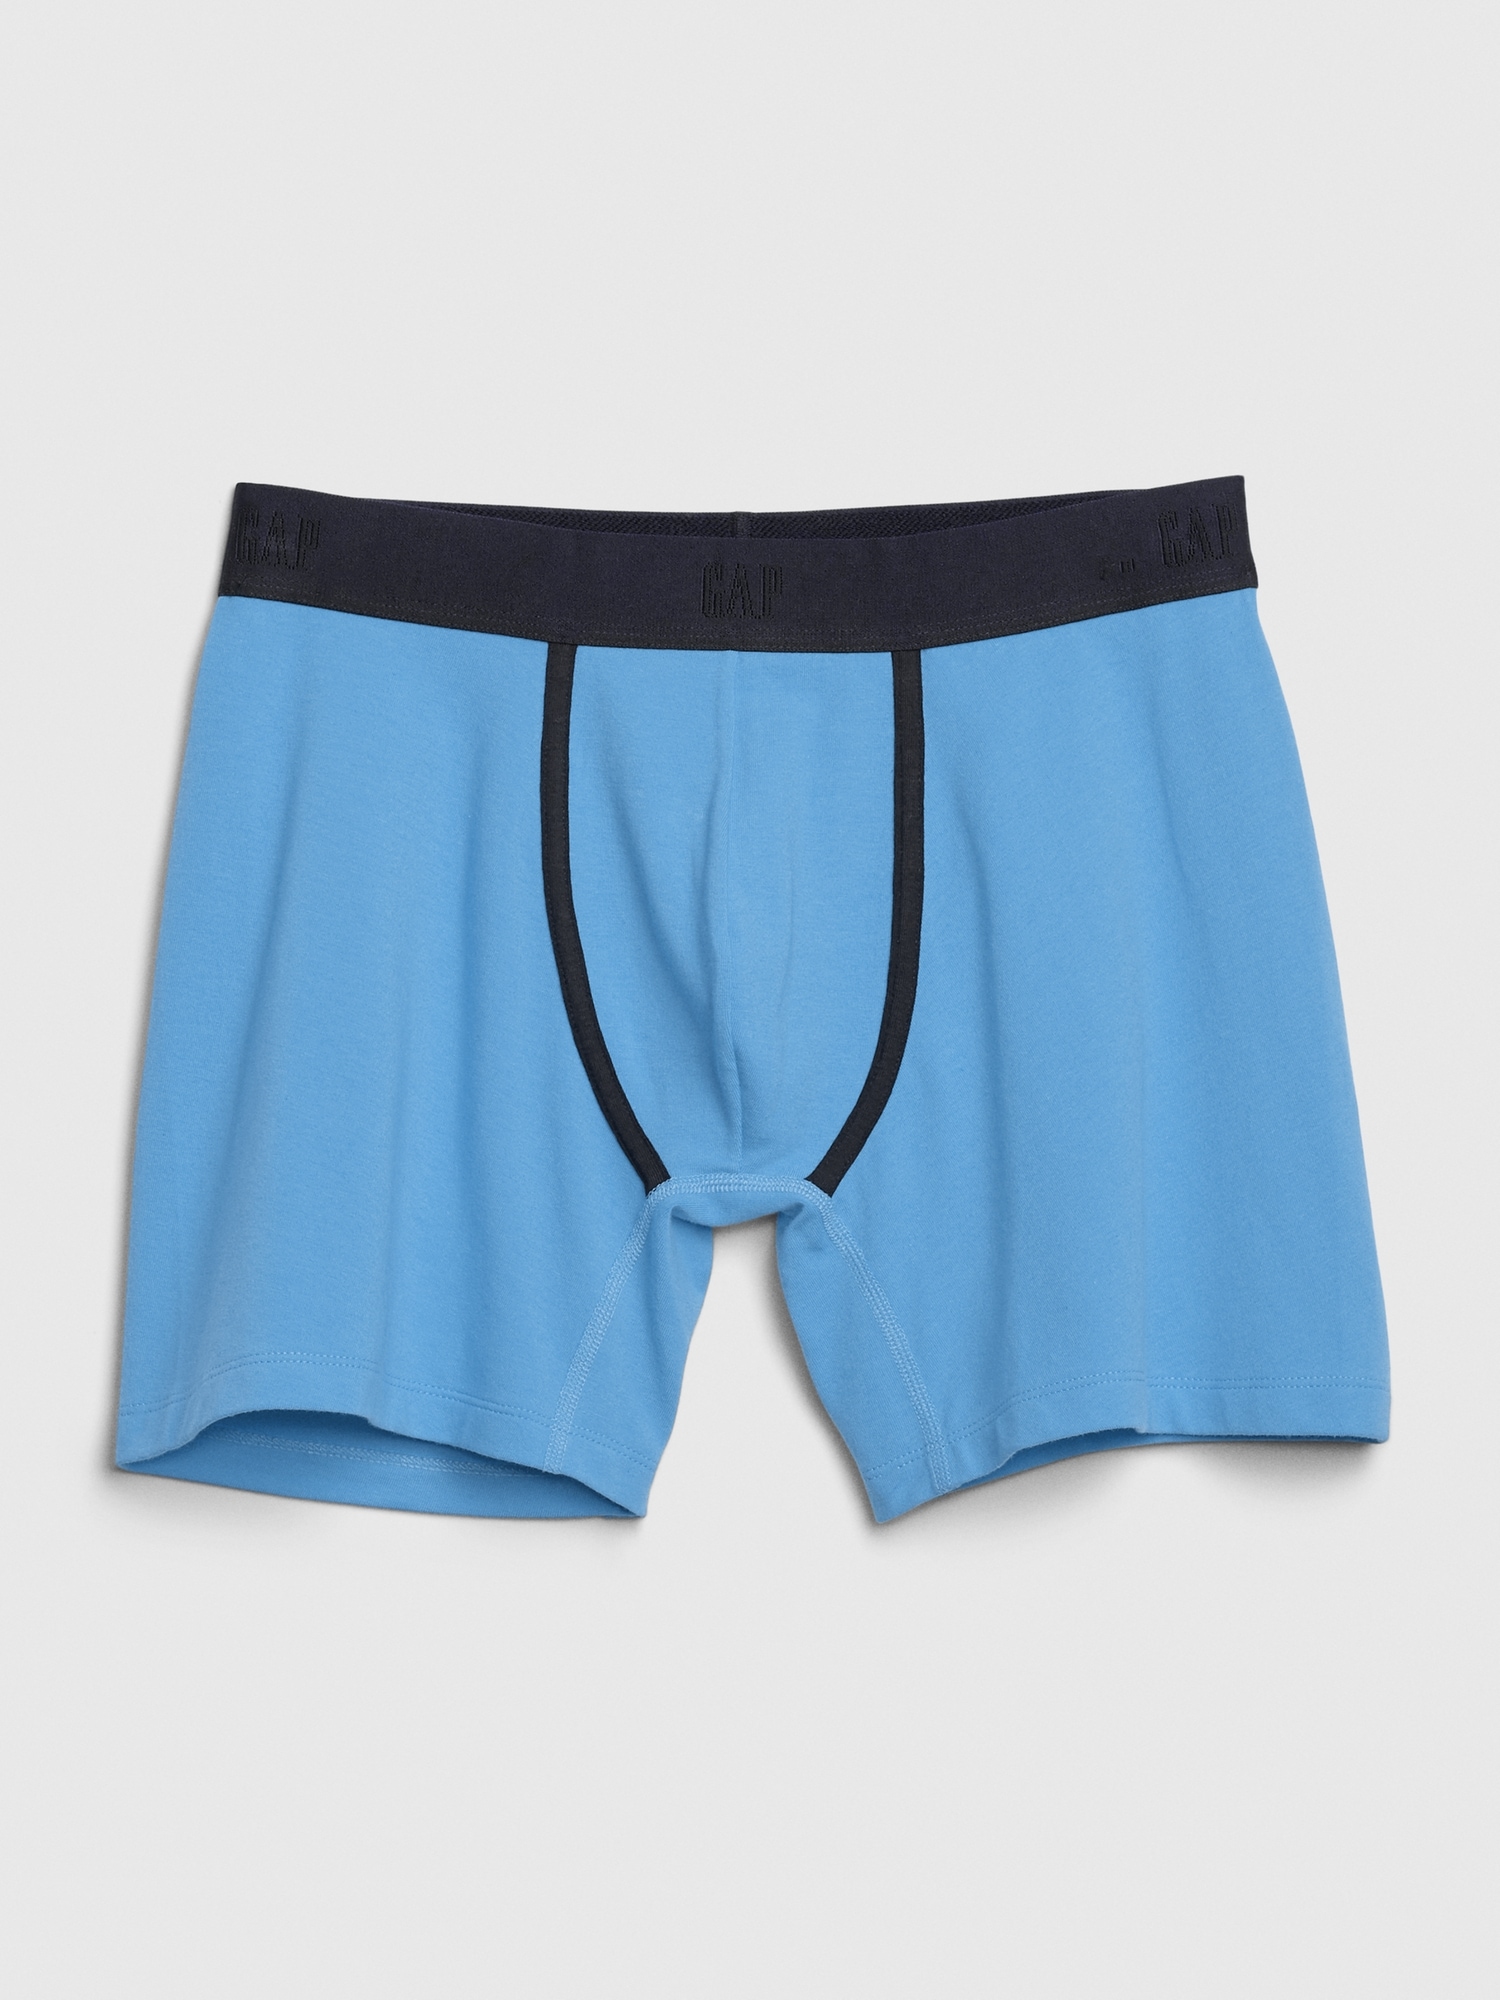 Buy Blue Boxers for Men by GAP Online